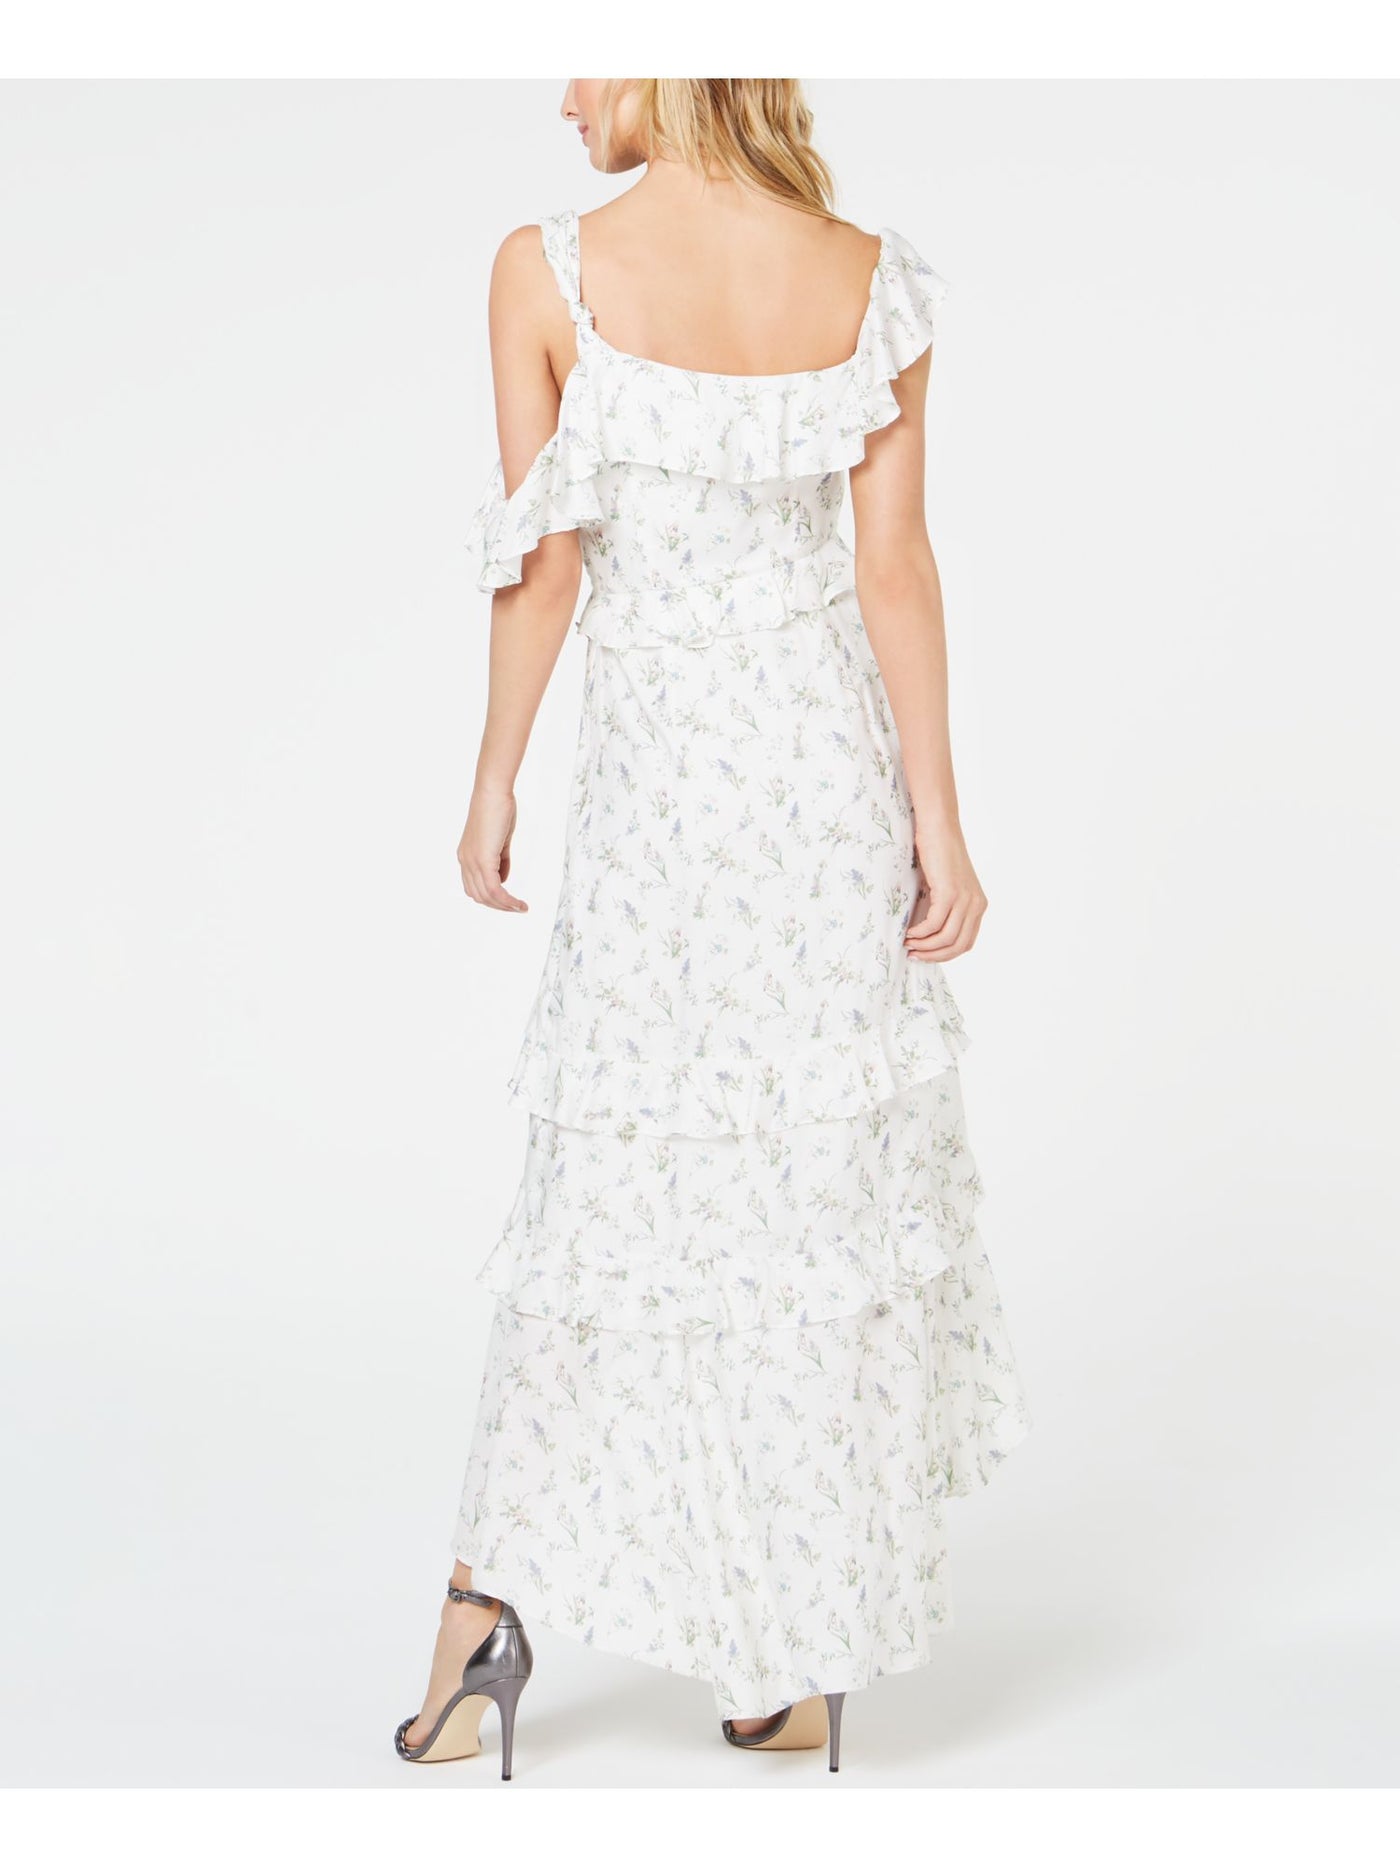 RACHEL ZOE Womens Ivory Printed Sleeveless Maxi Hi-Lo Formal Dress Size: 2